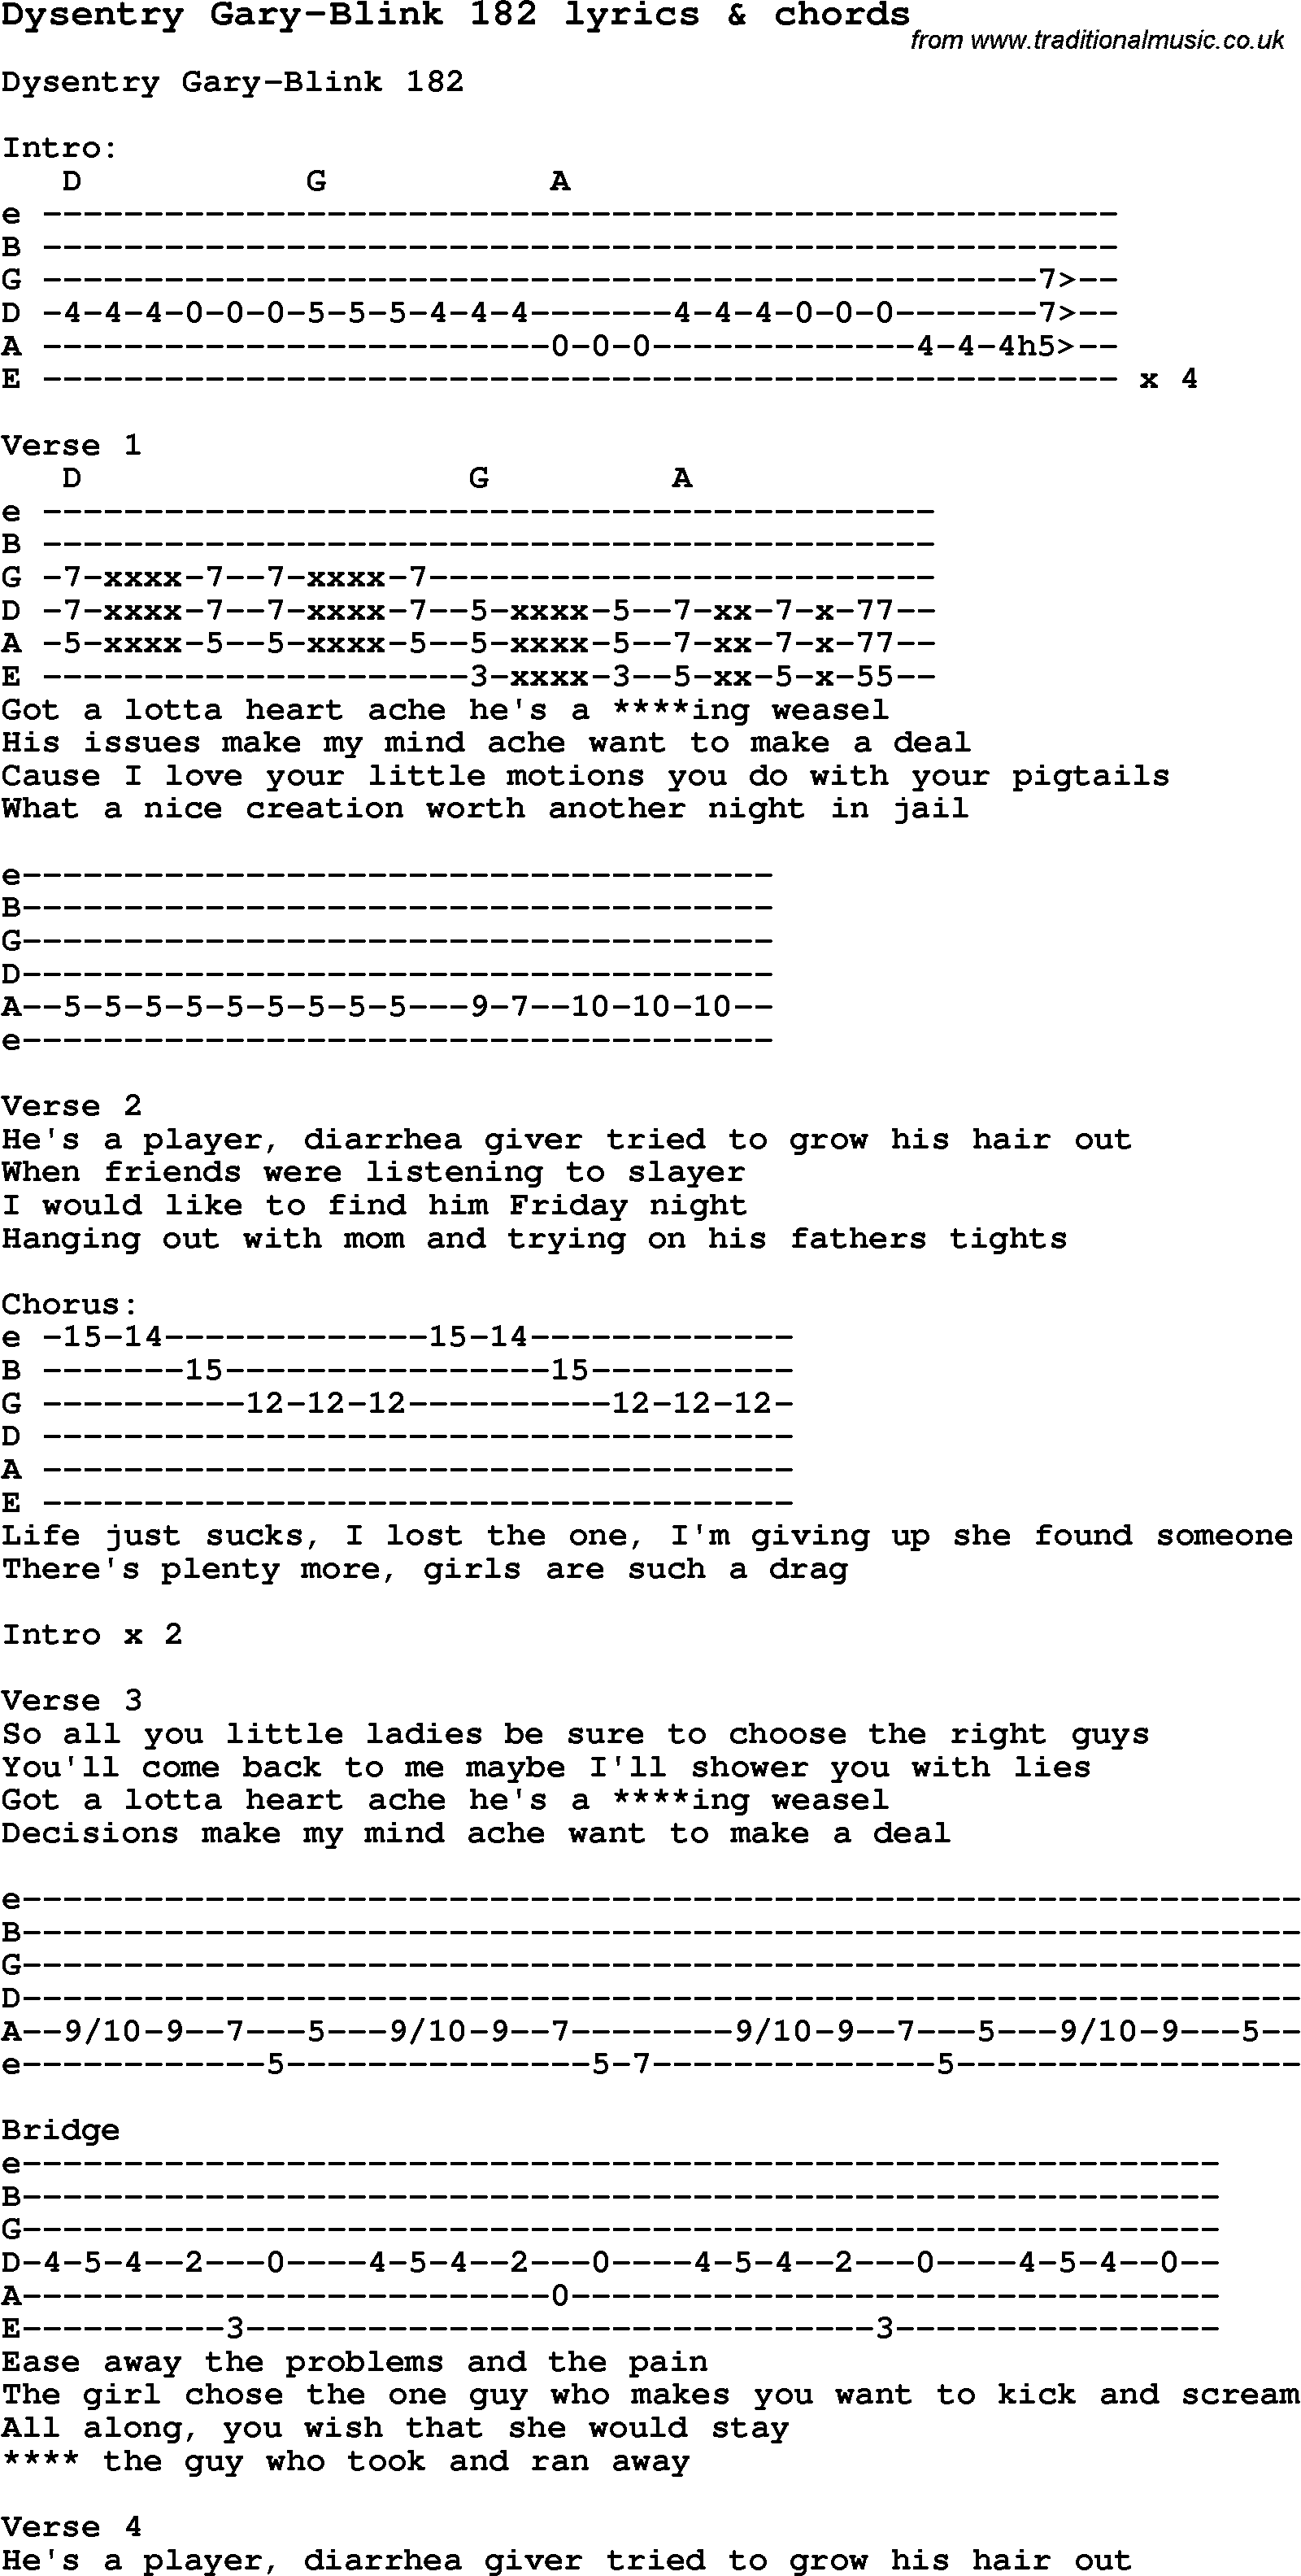 Love Song Lyrics for: Dysentry Gary-Blink 182 with chords for Ukulele, Guitar Banjo etc.